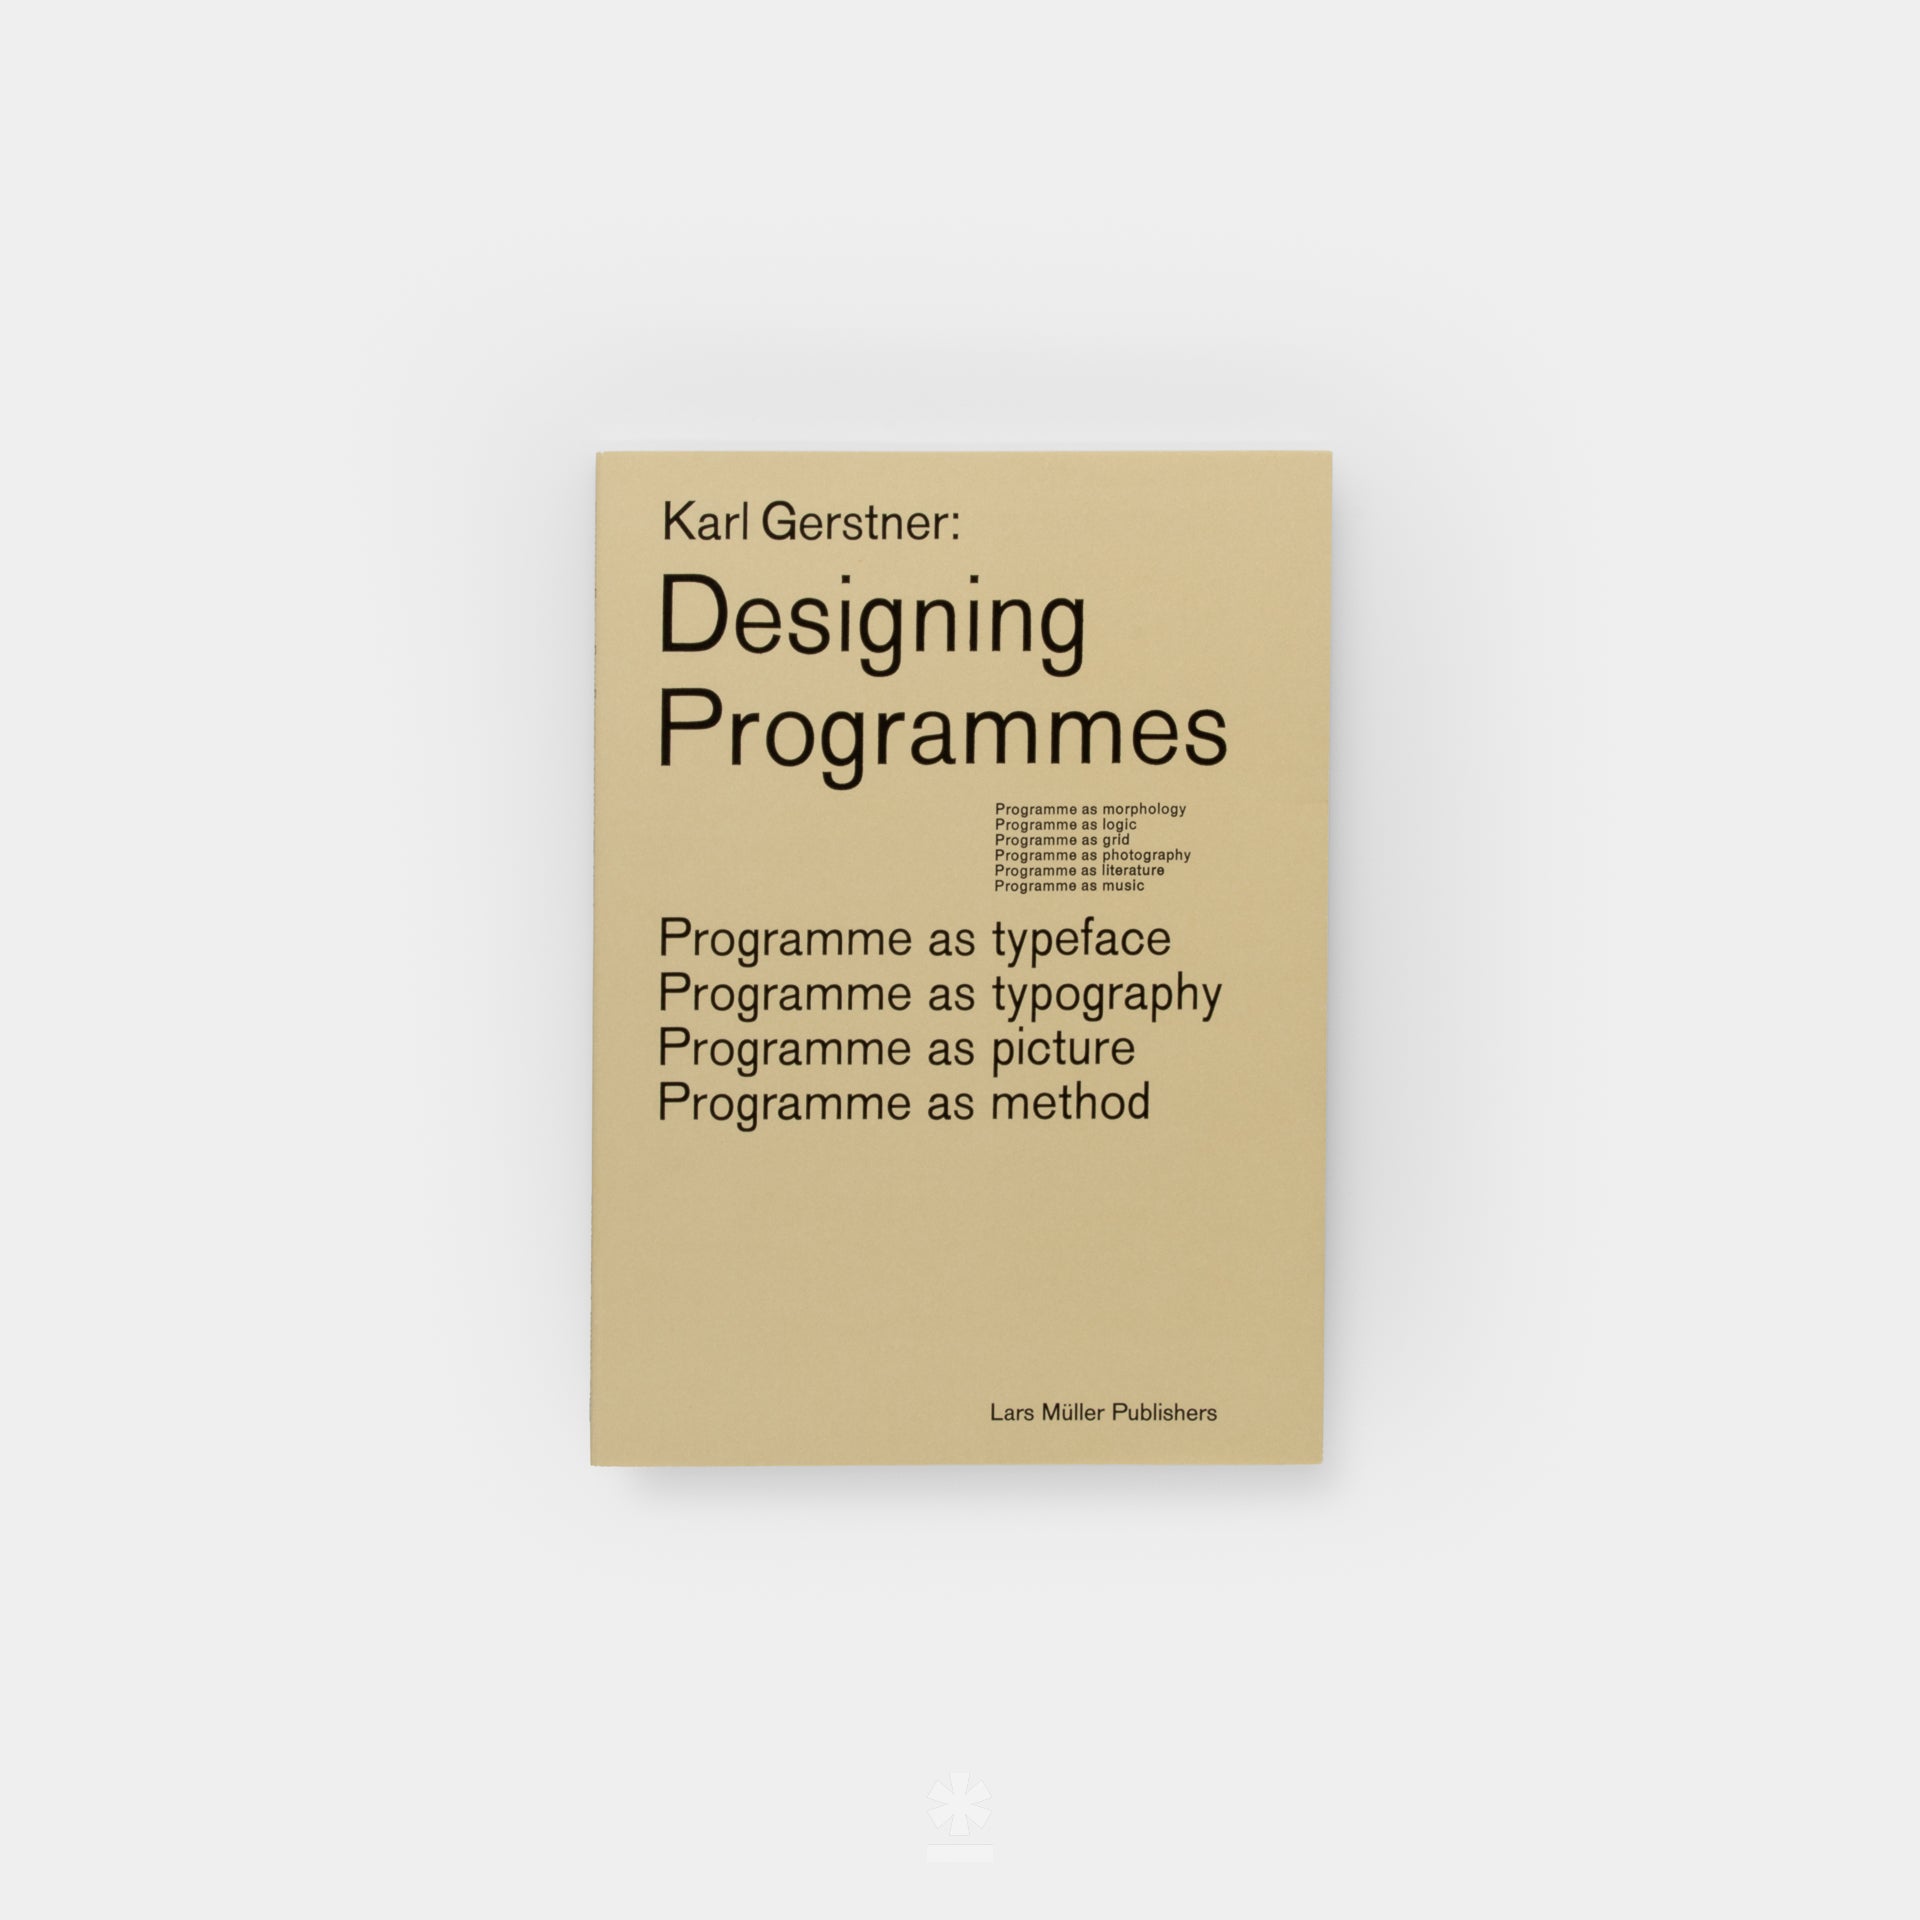 Karl Gerstner: Designing Programmes: Programme as Typeface, Typography, Picture, Method